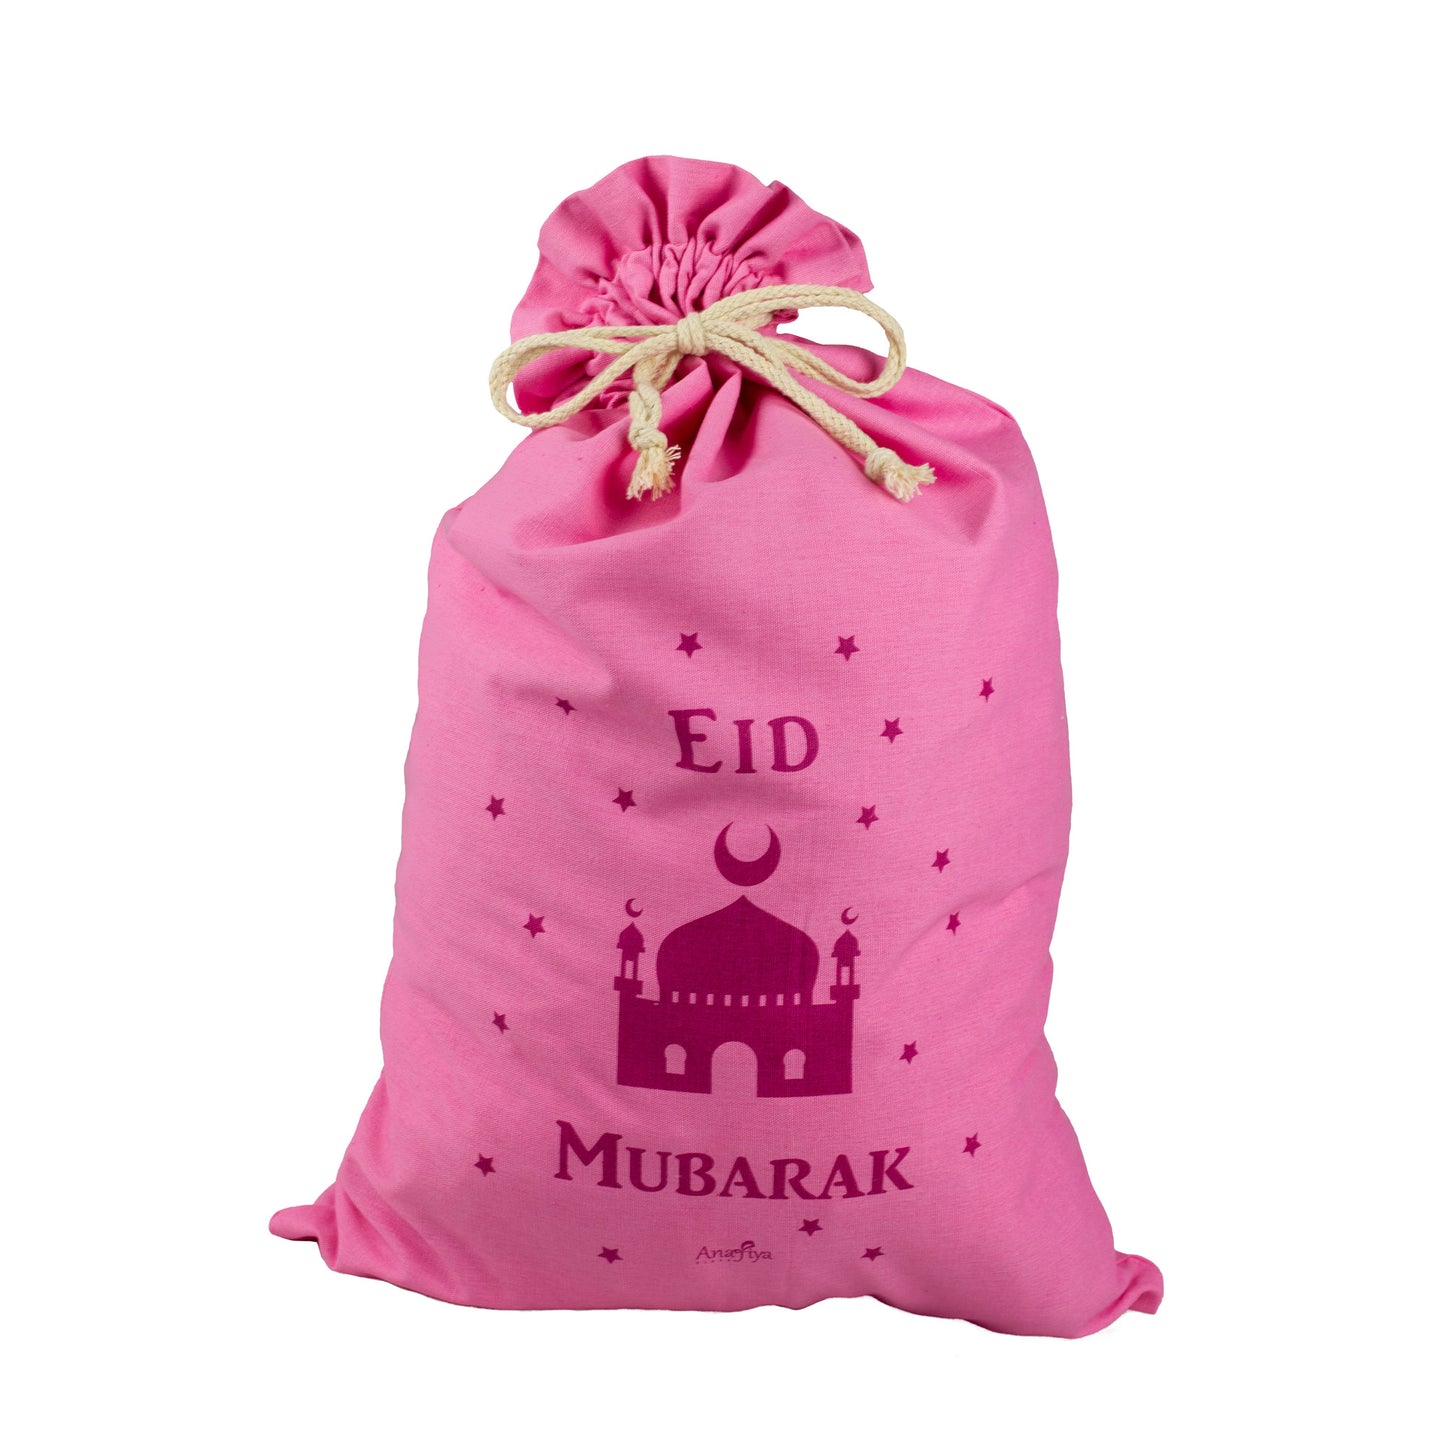 Eid Mubarak Gift Sack - Pink